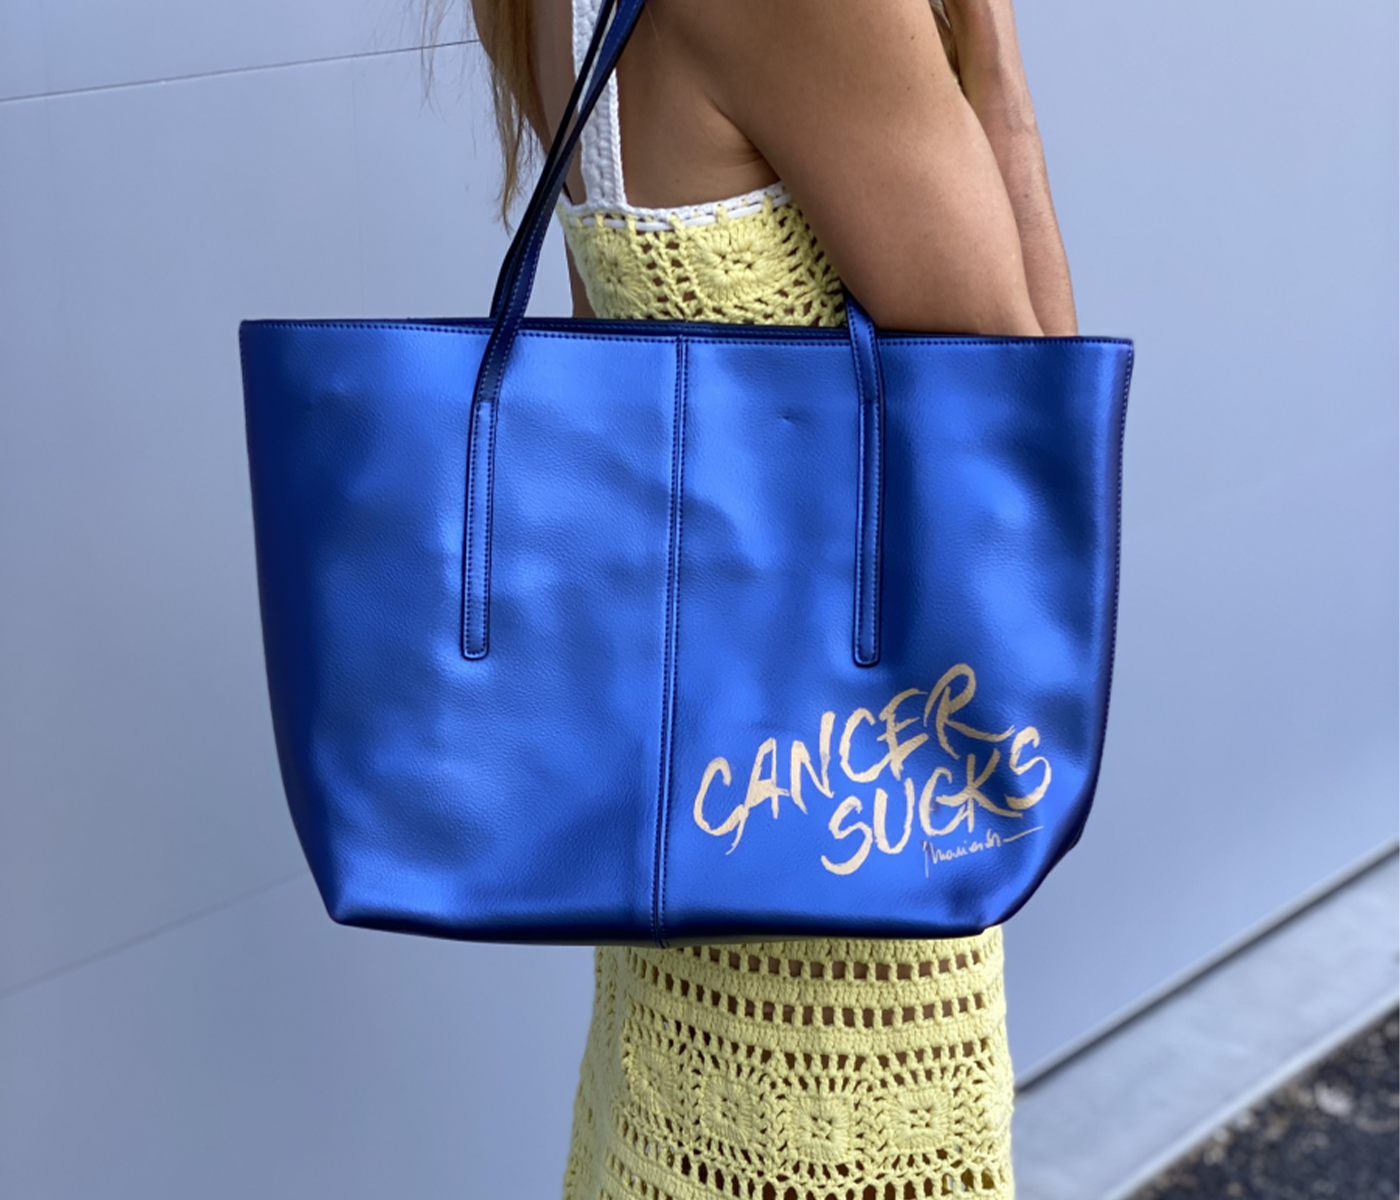 Cancer Sucks Handbags.png